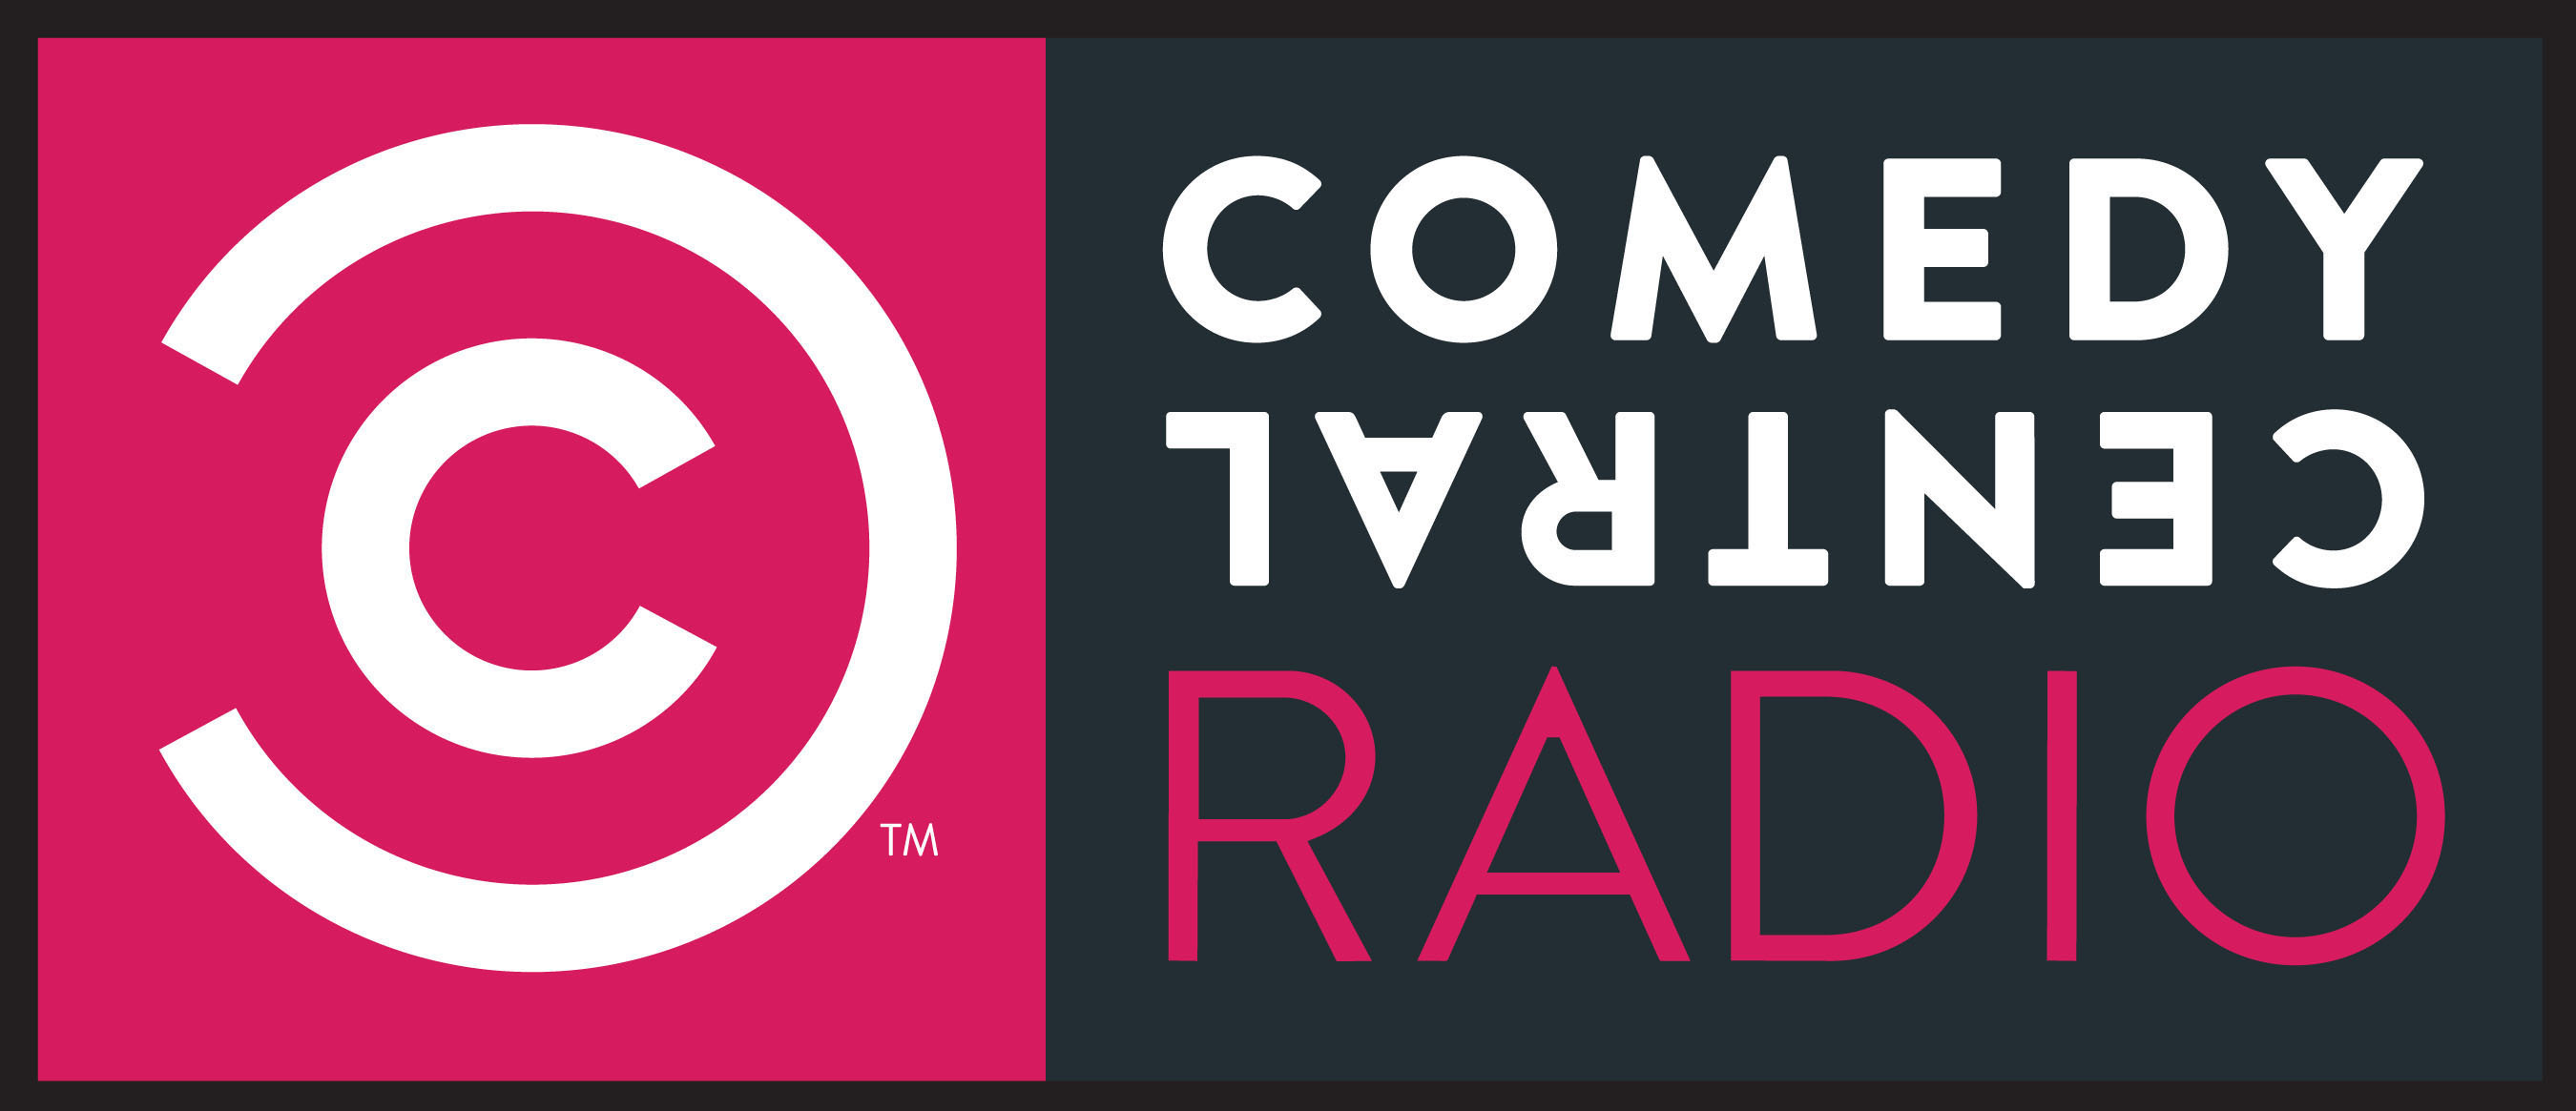 COMEDY CENTRAL Radio logo.  (PRNewsFoto/COMEDY CENTRAL)